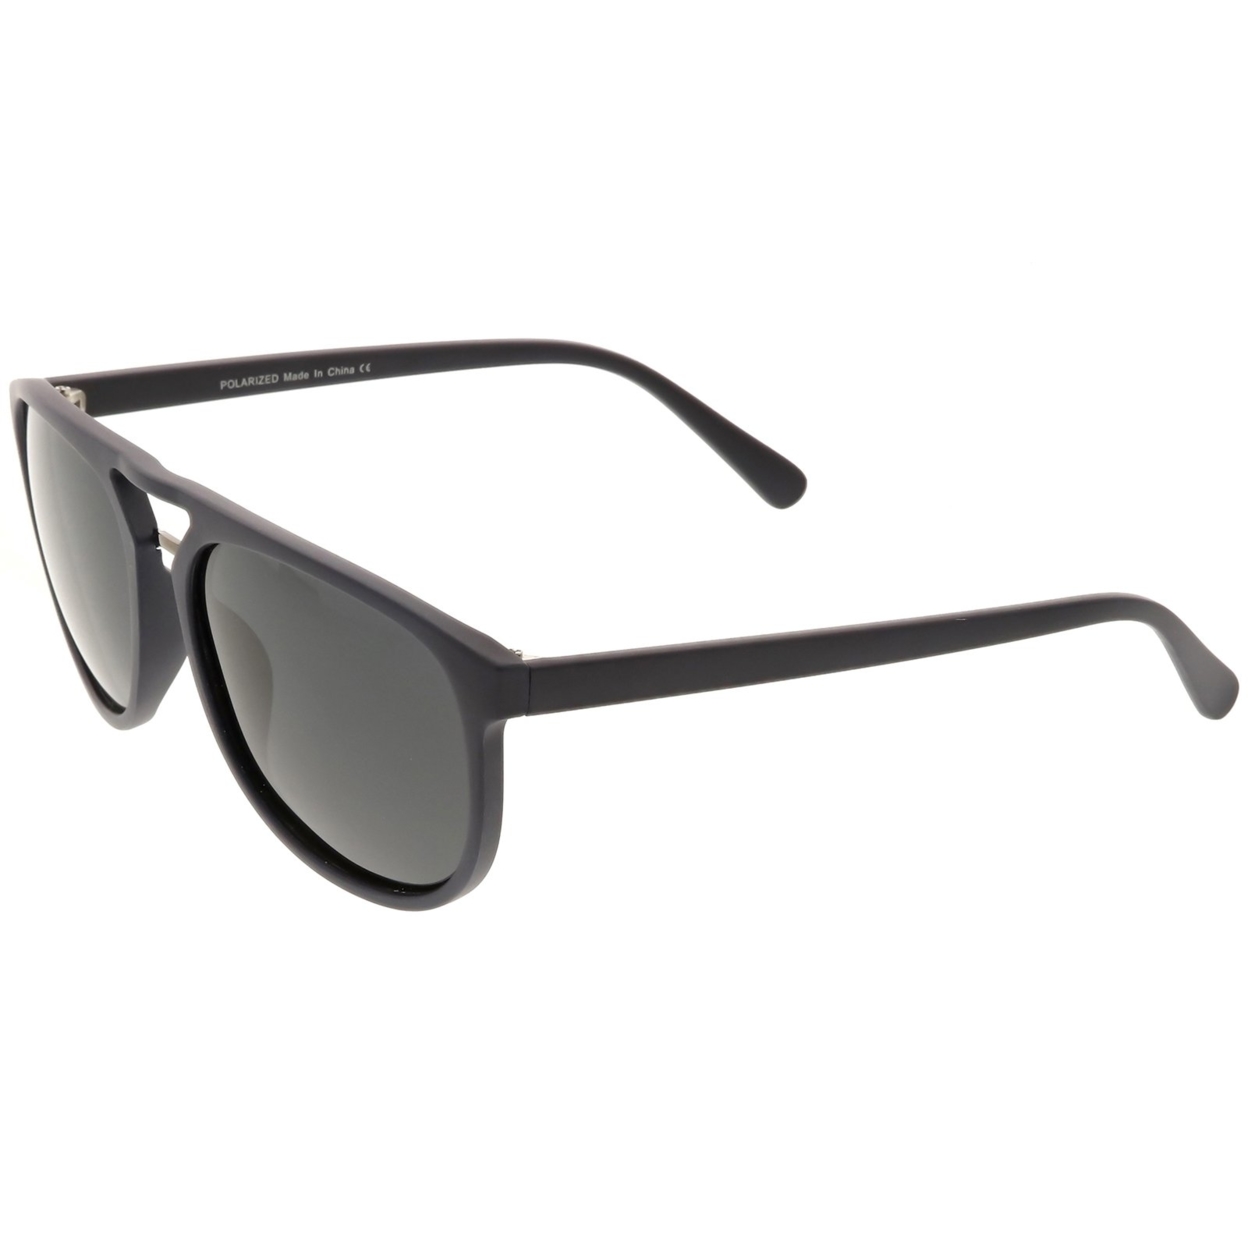 Premium Polarized Flat Top Aviator Sunglasses Metal Nose Bridge Round Lens 55mm - Rubberized Matte Black / Green